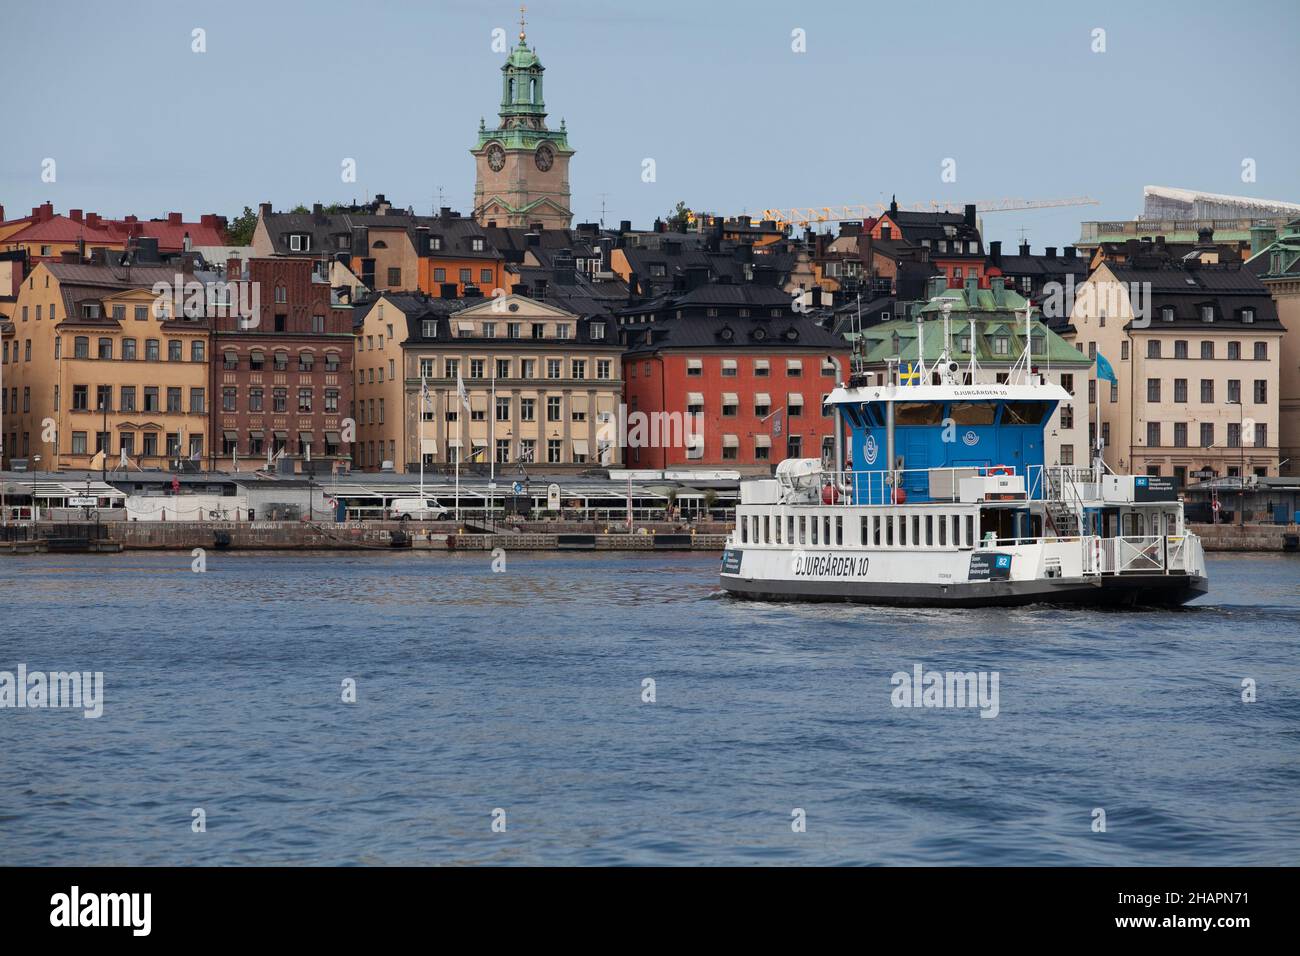 Stockholm, Sweden - August 12, 2020: The public commuter ferry called Djurgården ferry or Djurgårdsfärjan in Swedish. On it´s way from Djurgården to t Stock Photo